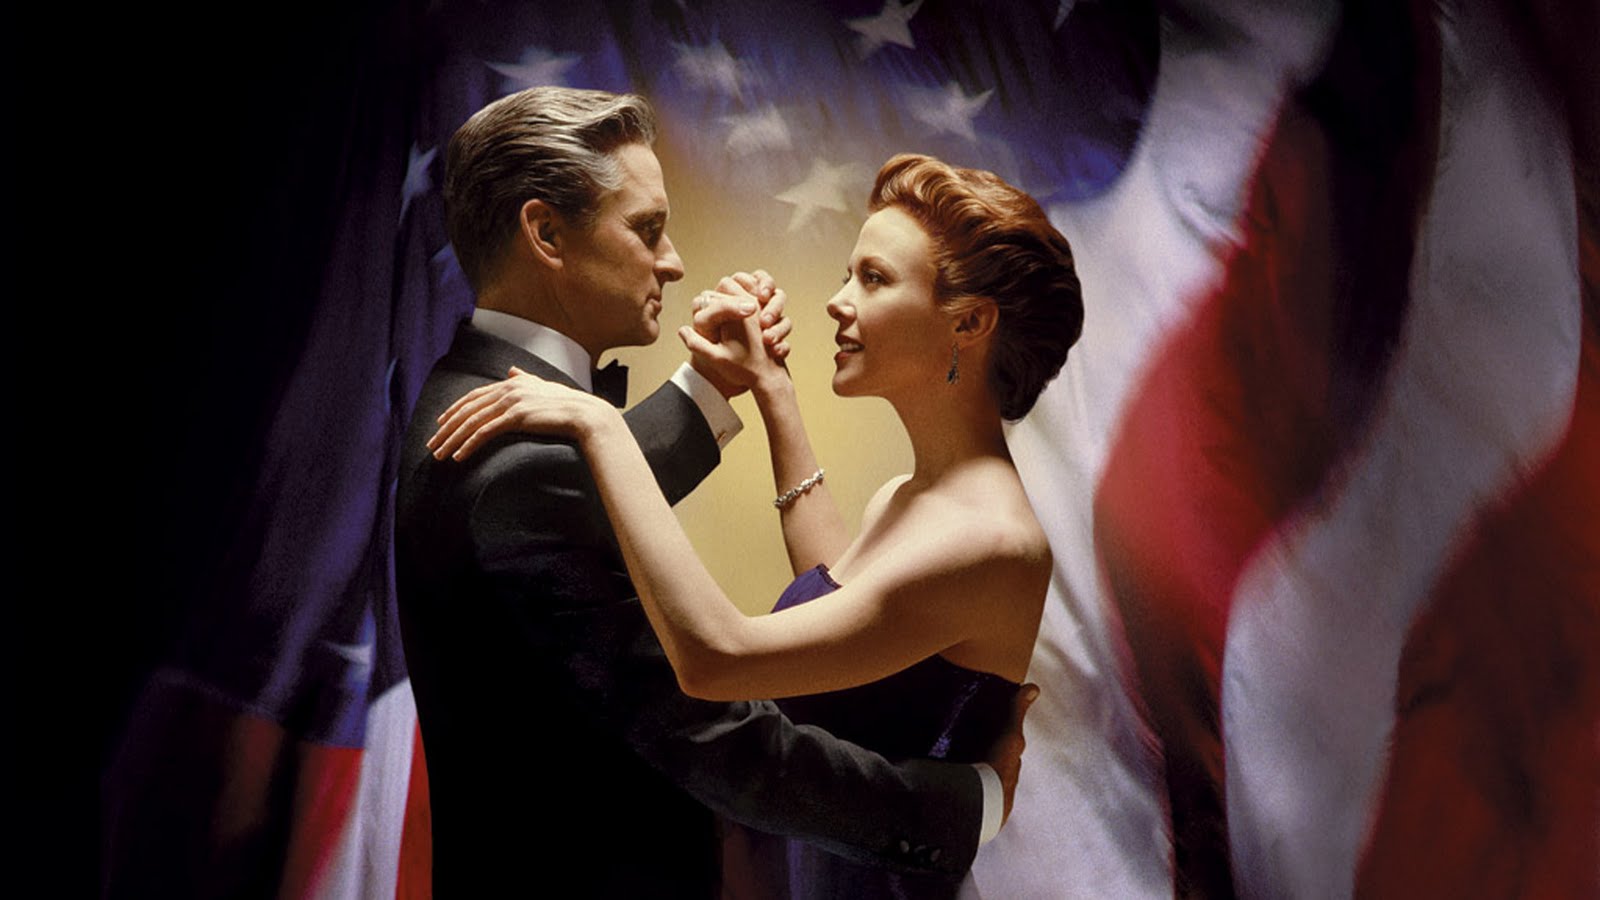 I presidenti e il cinema: i 10 film più belli sui presidenti americani